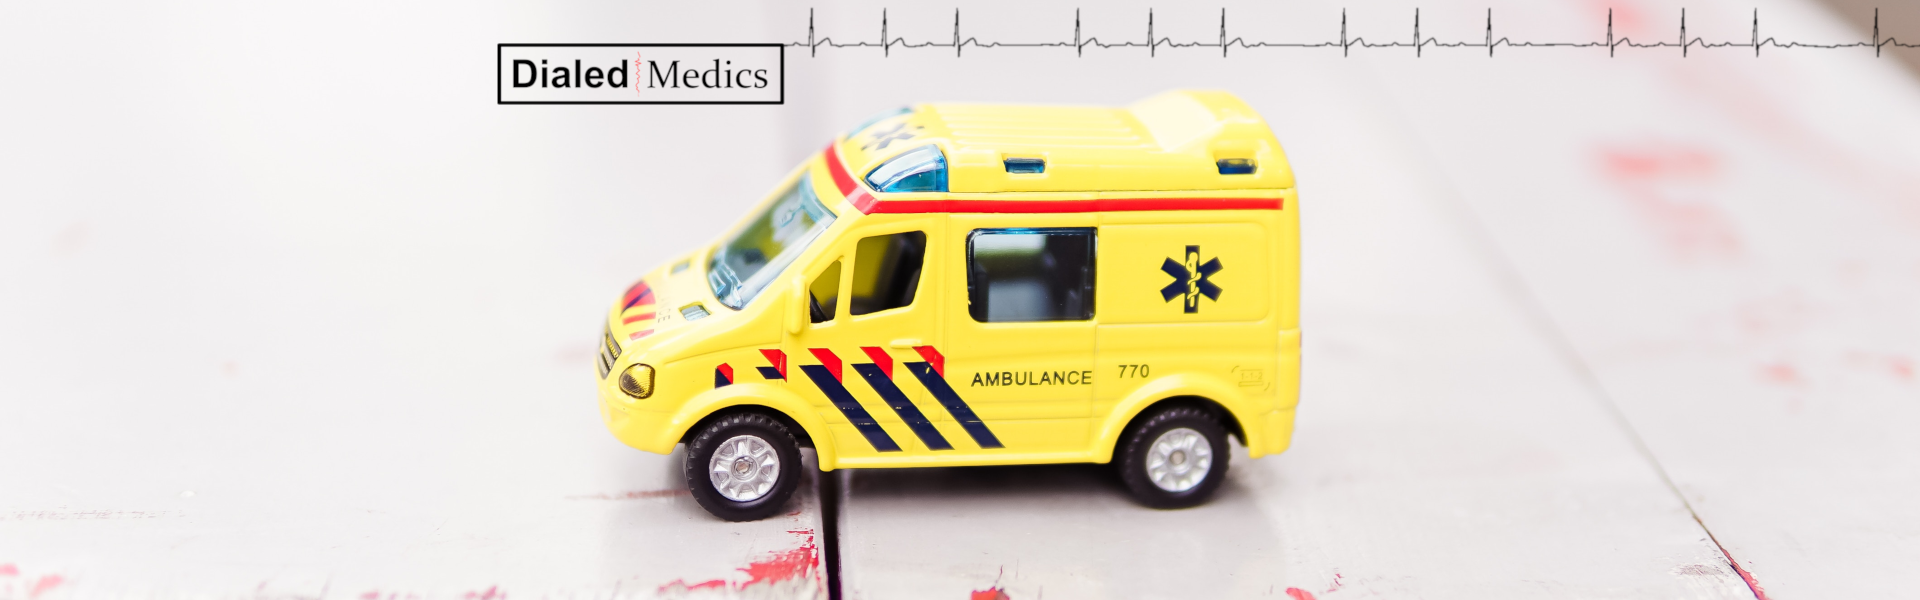 Yellow ambulance with Dialed Medics logo.